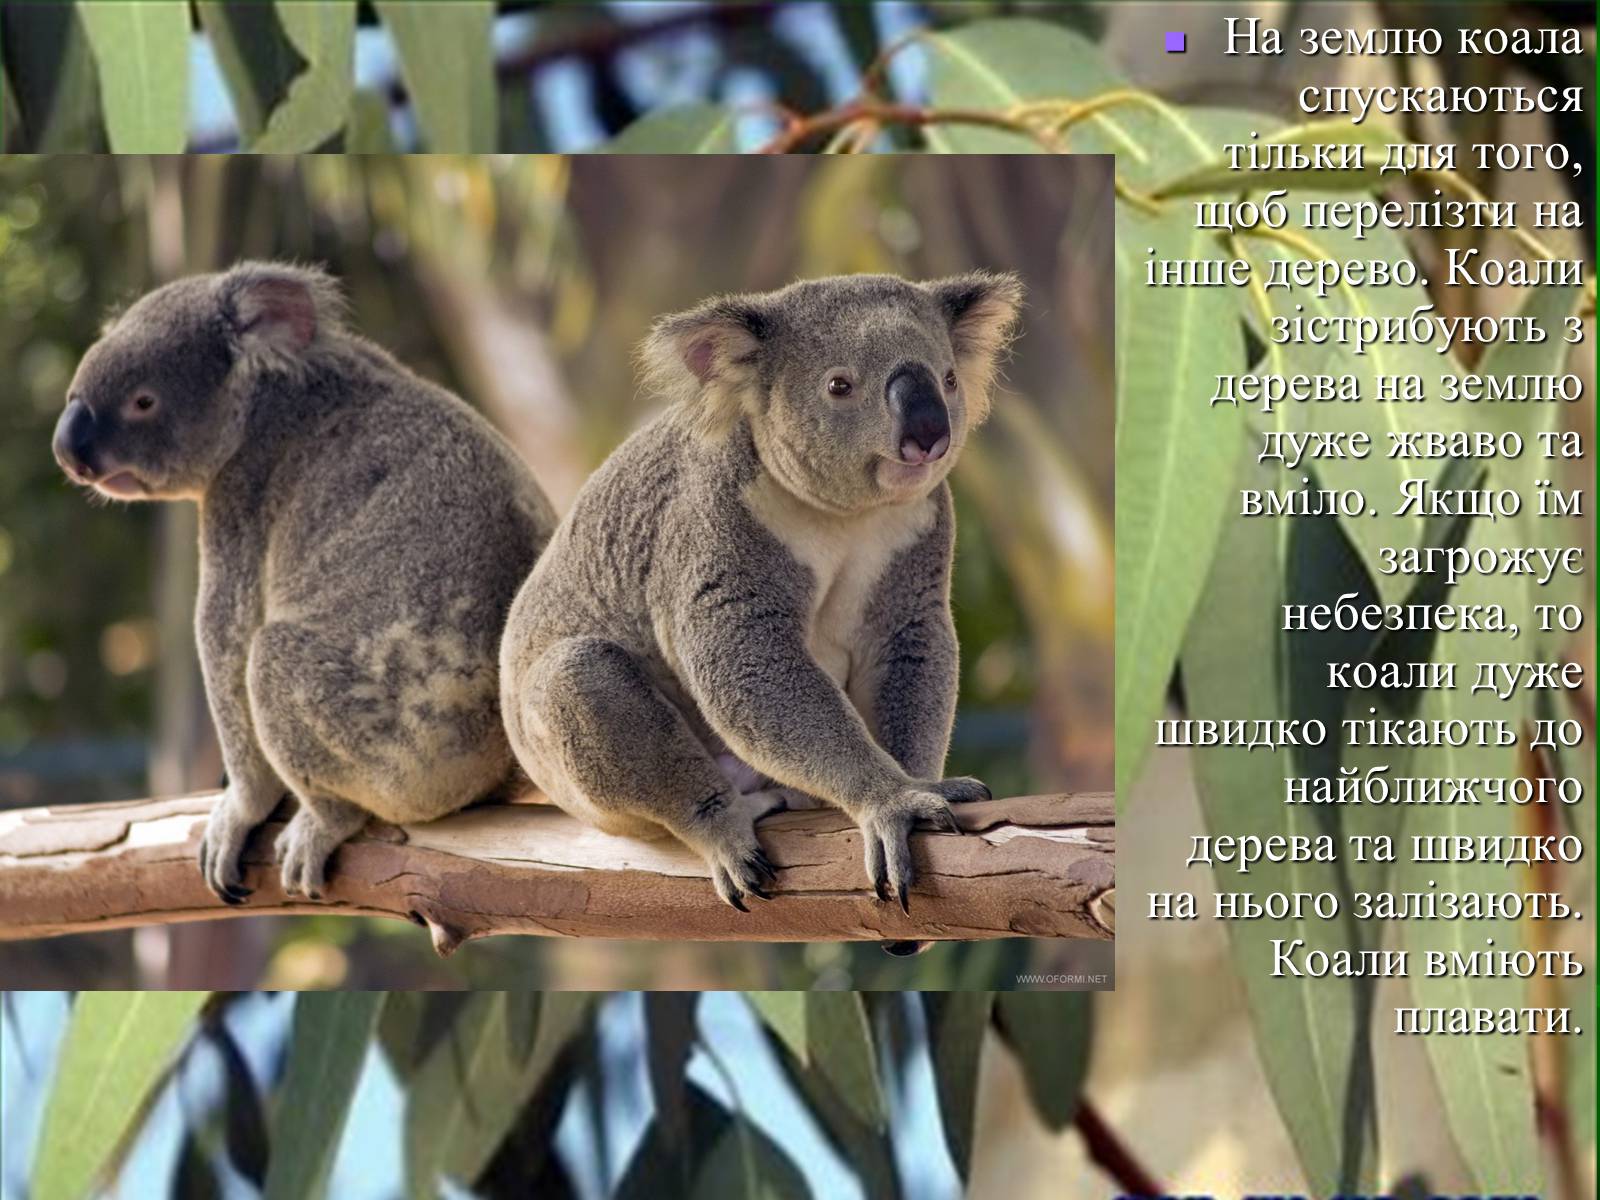 Коала перевод. Коала инфографика. Загадка про коалу. Презентация про Куалу. Описание Куалы.